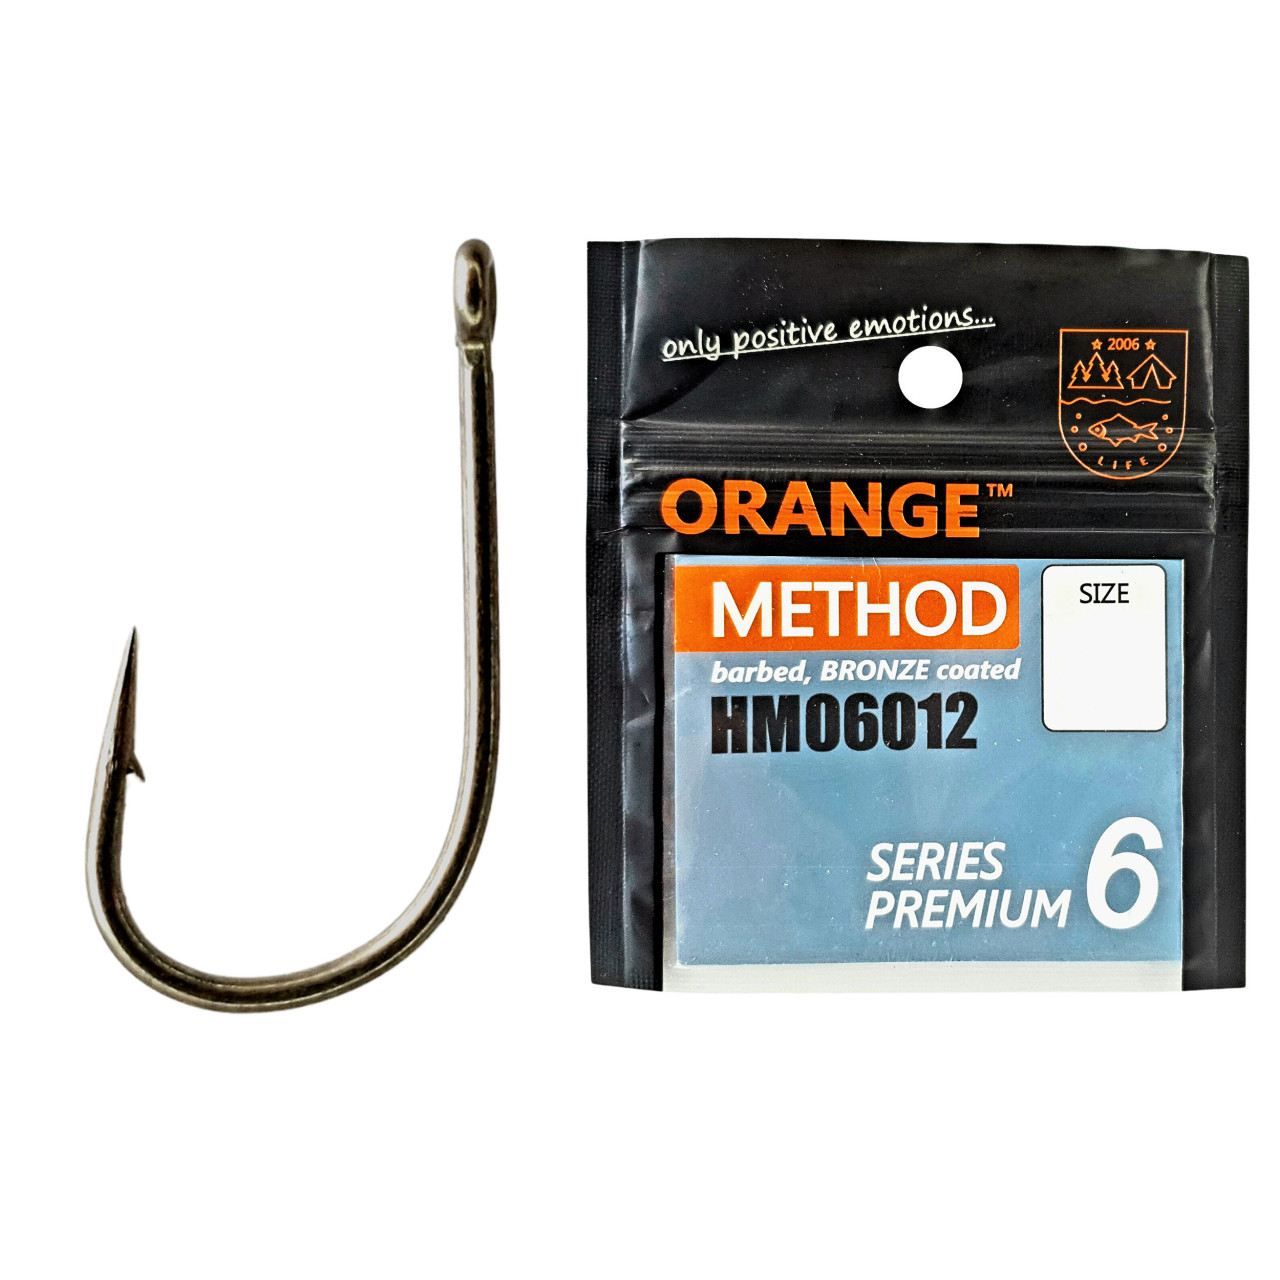 Carlig MMT Orange no.10 Method Bronze Coated Premium Series 6 8buc